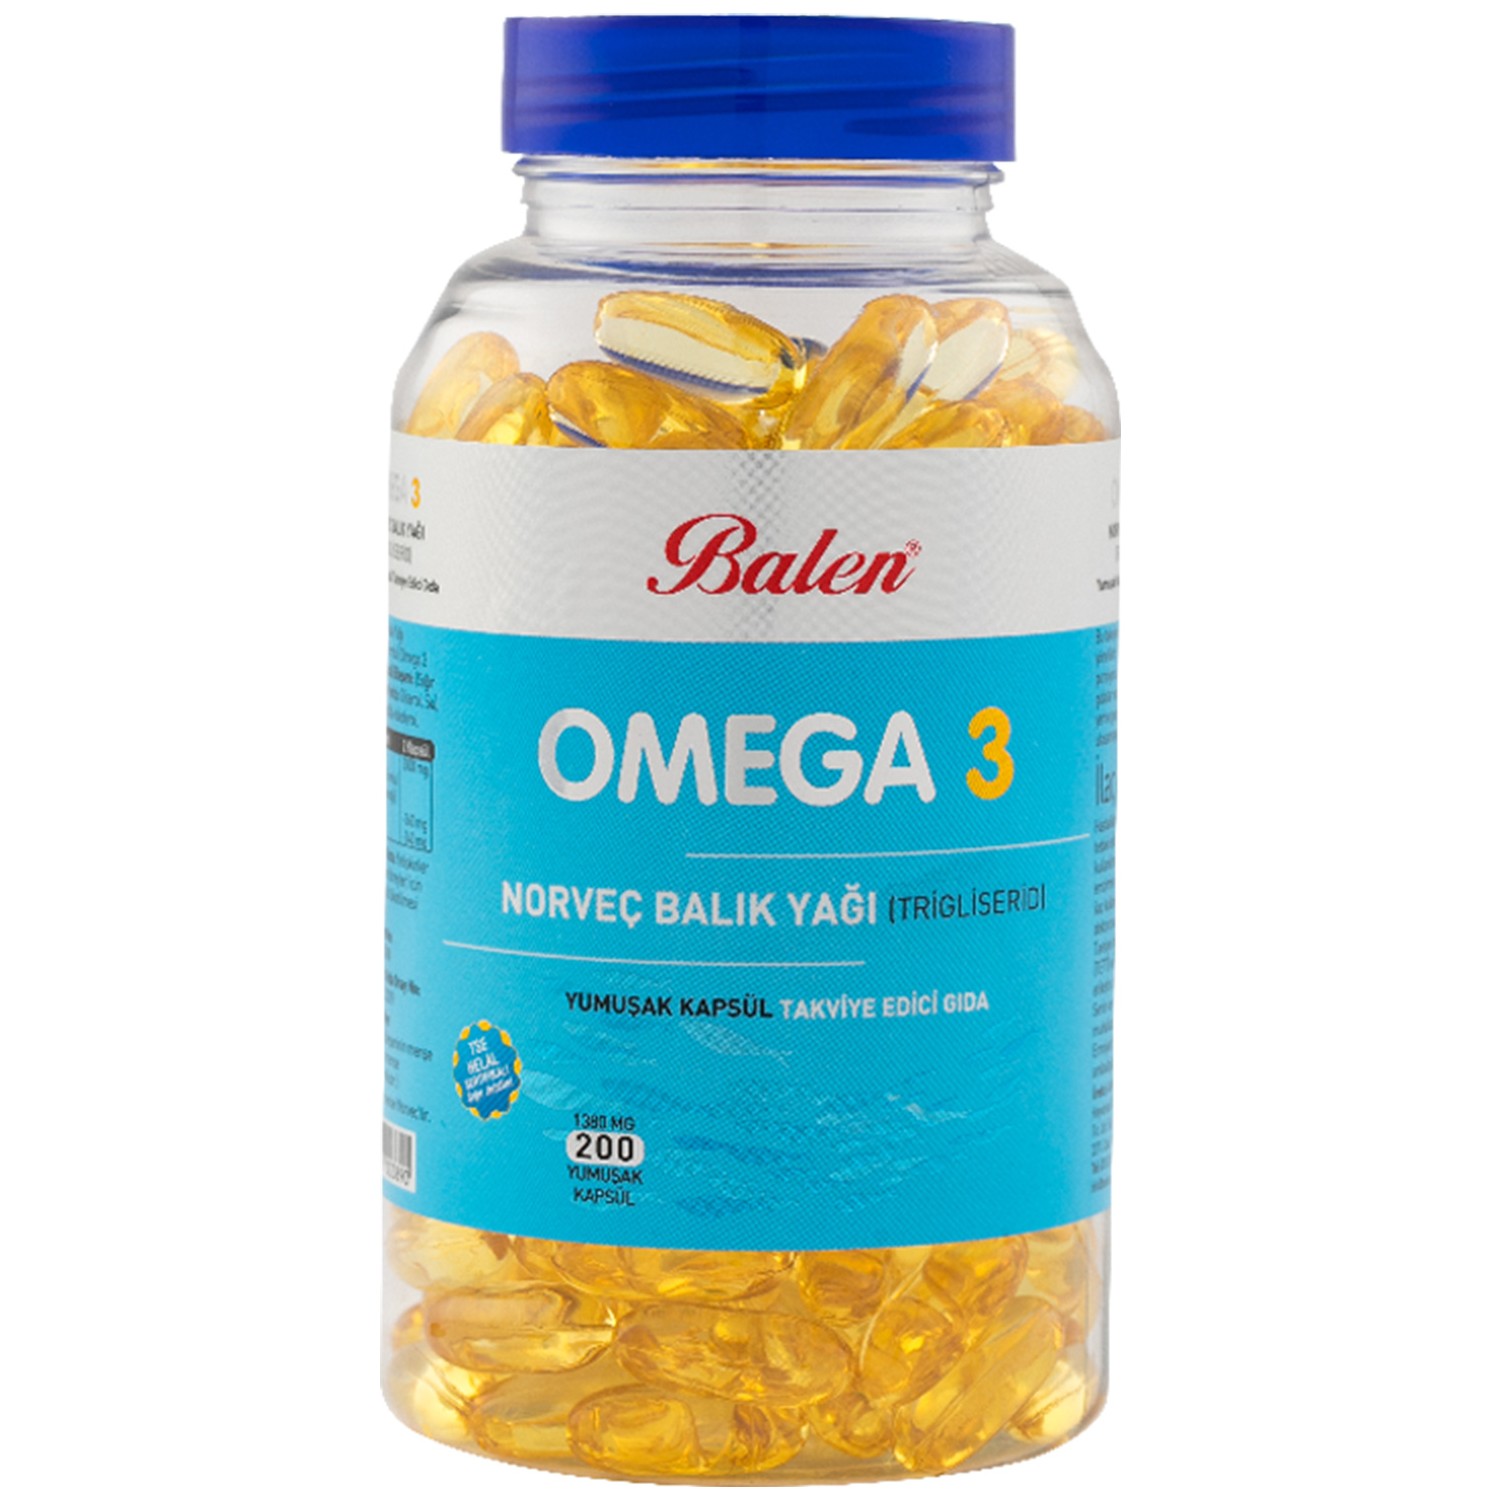 Норвежский рыбий жир Balen Omega-3 (триглицерид) 1380 мг, 200 капсул комплекс омега 3 1000 мг super nutrition omega 3 fish oil рыбий жир 90 капсул